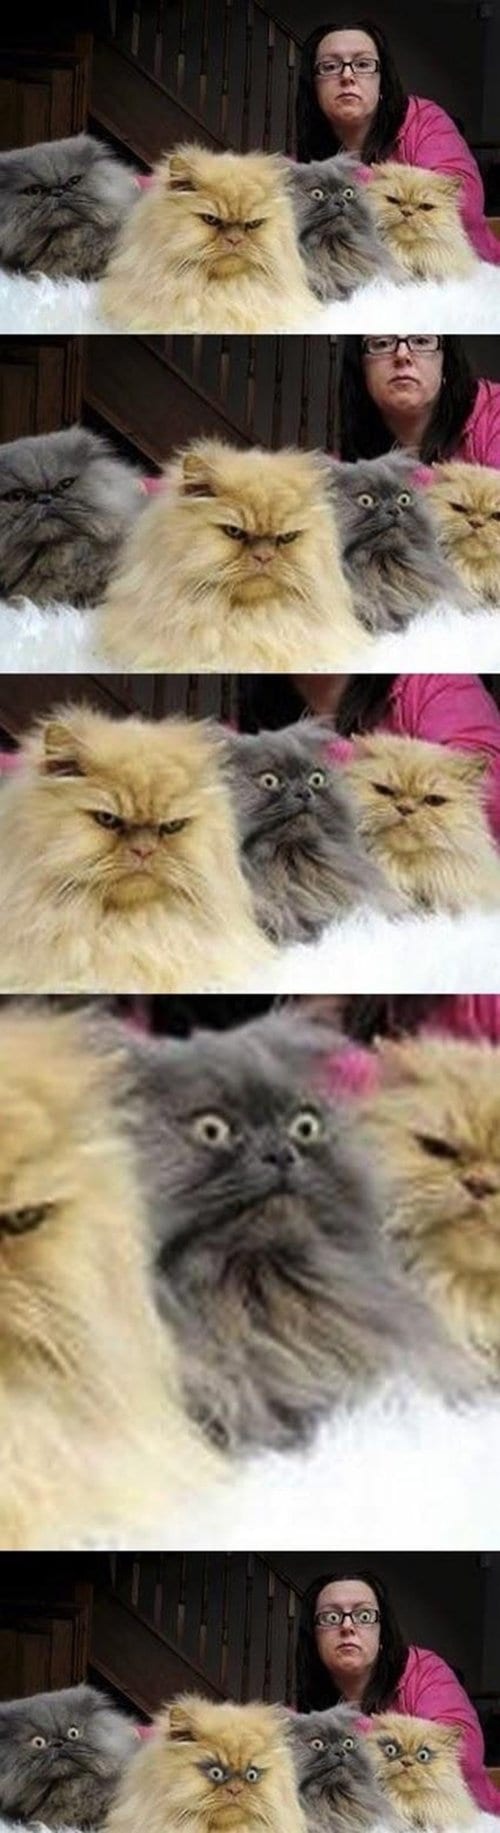 hilarious-face-swaps-cat